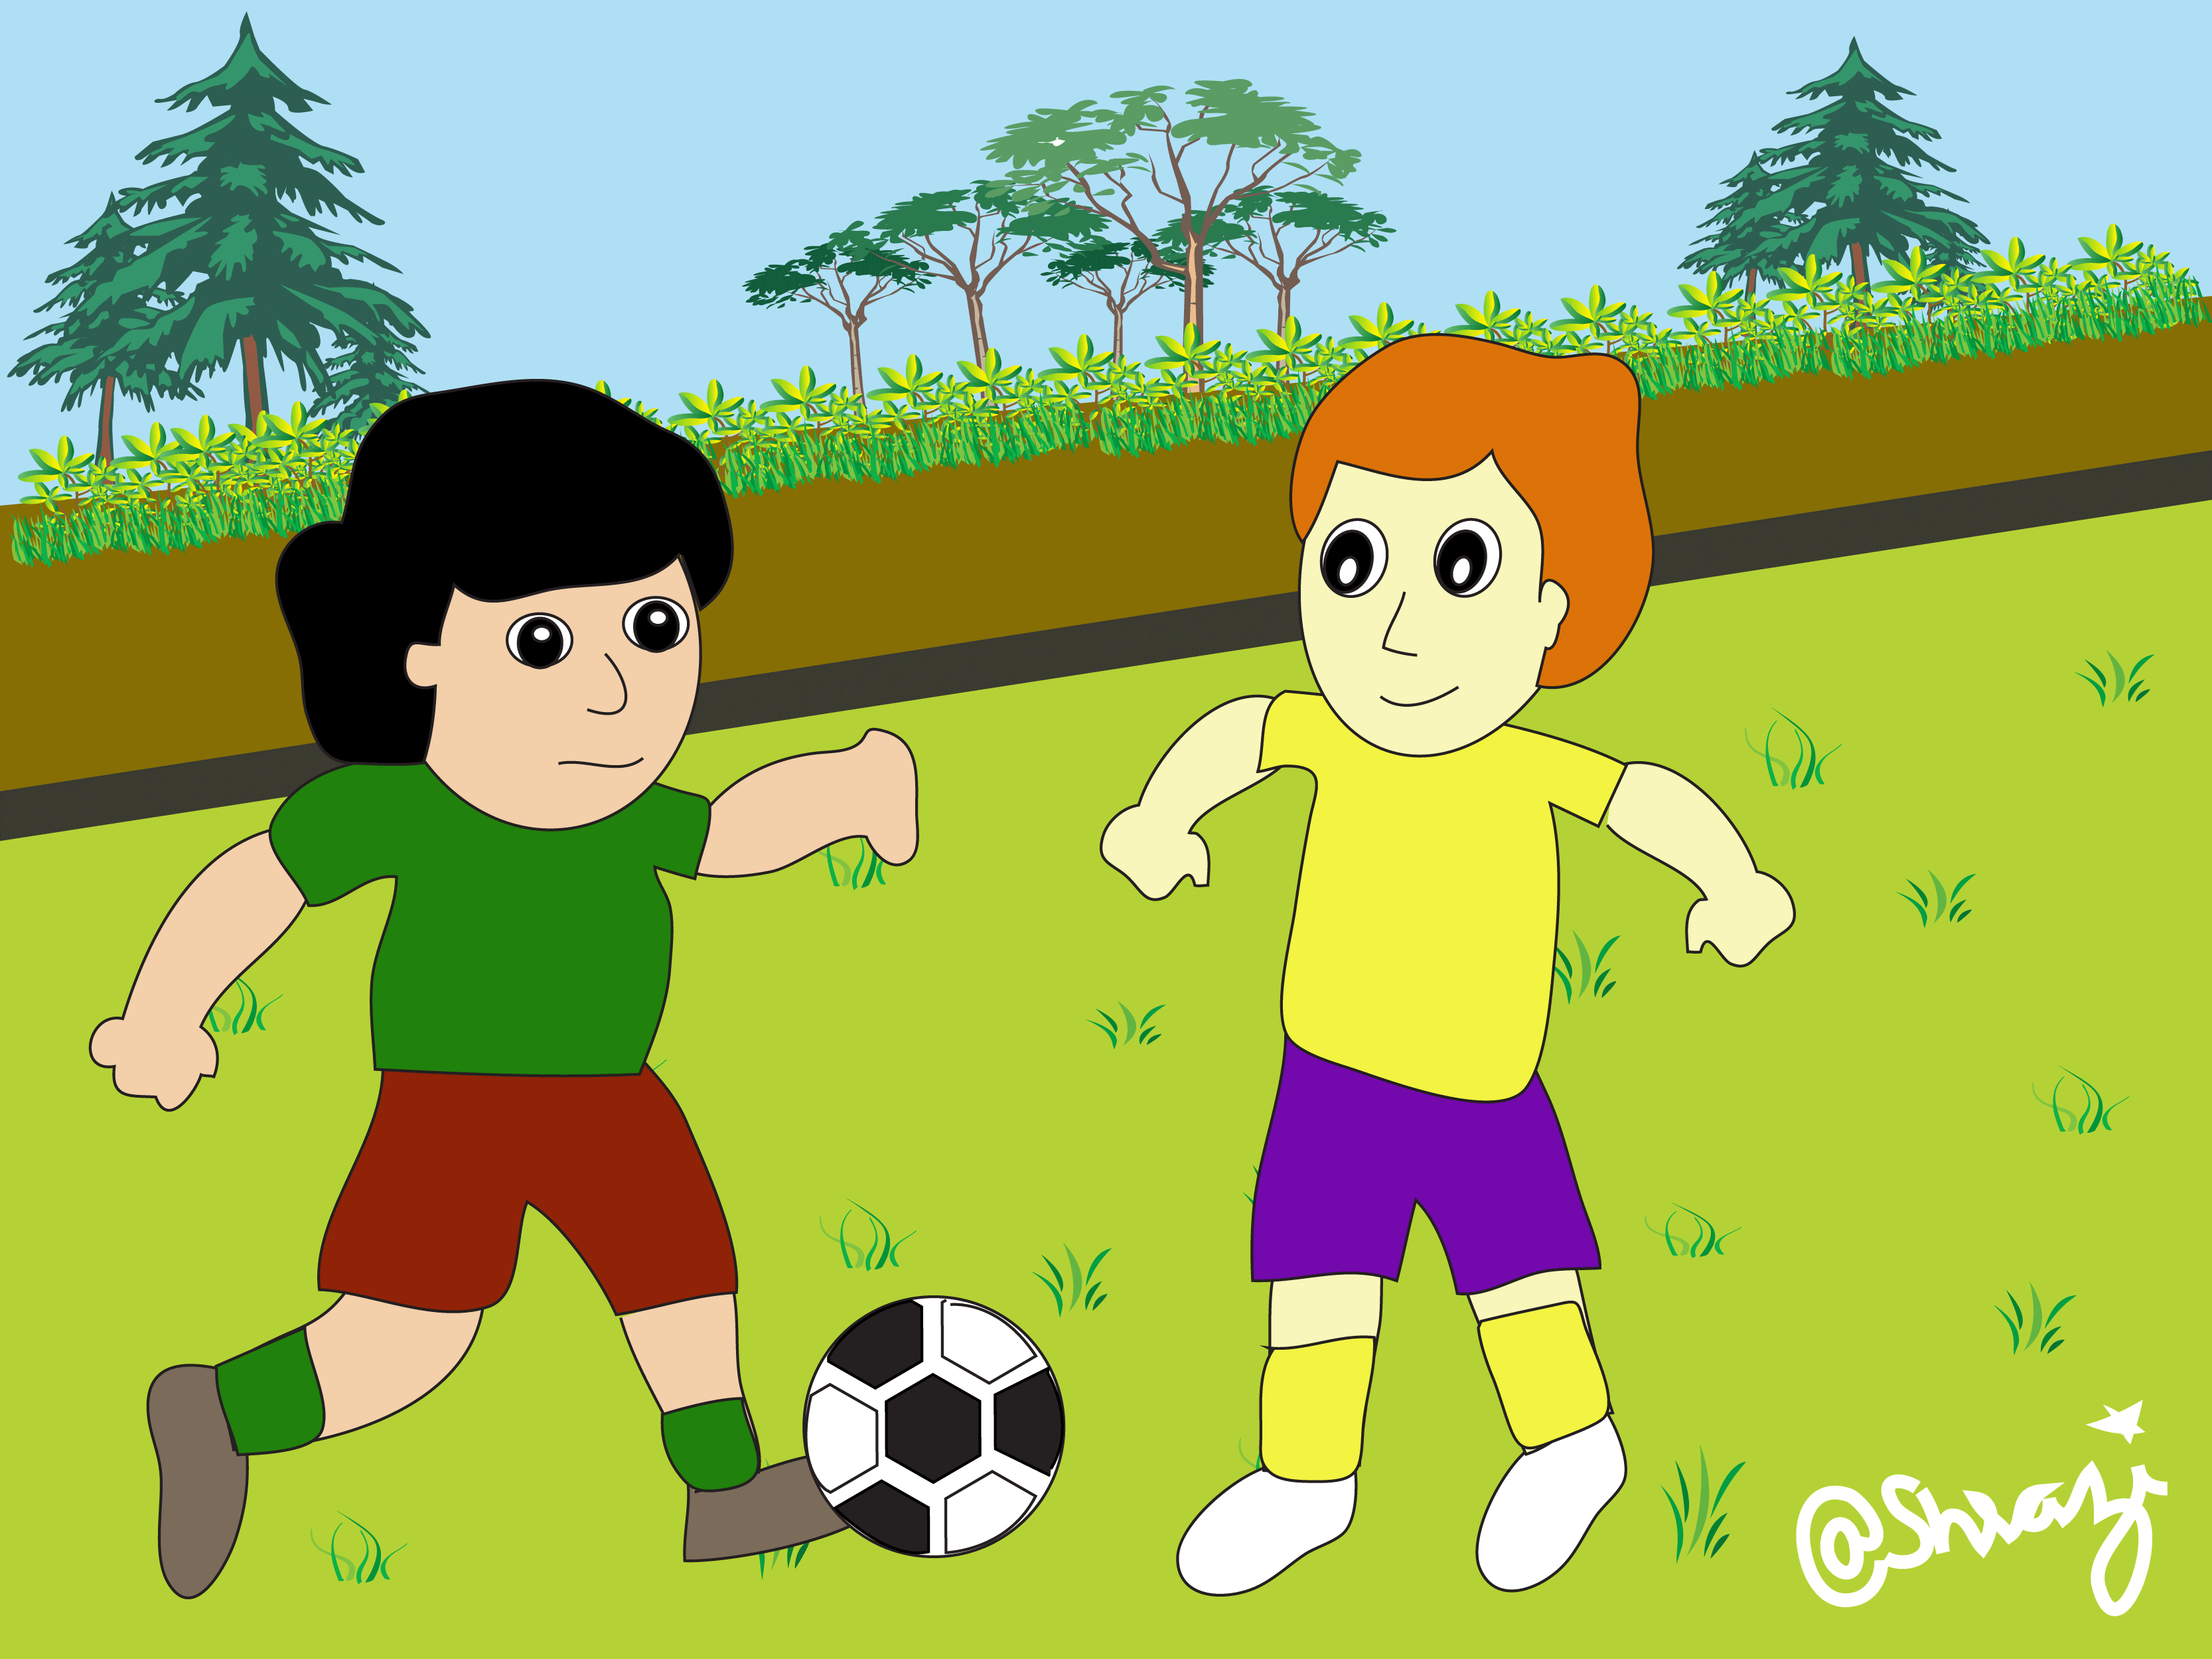 Play a game he he s playing. Футбольная анимация. Мультипликация футбол. Анимации для детей футбол. Футболист анимация.